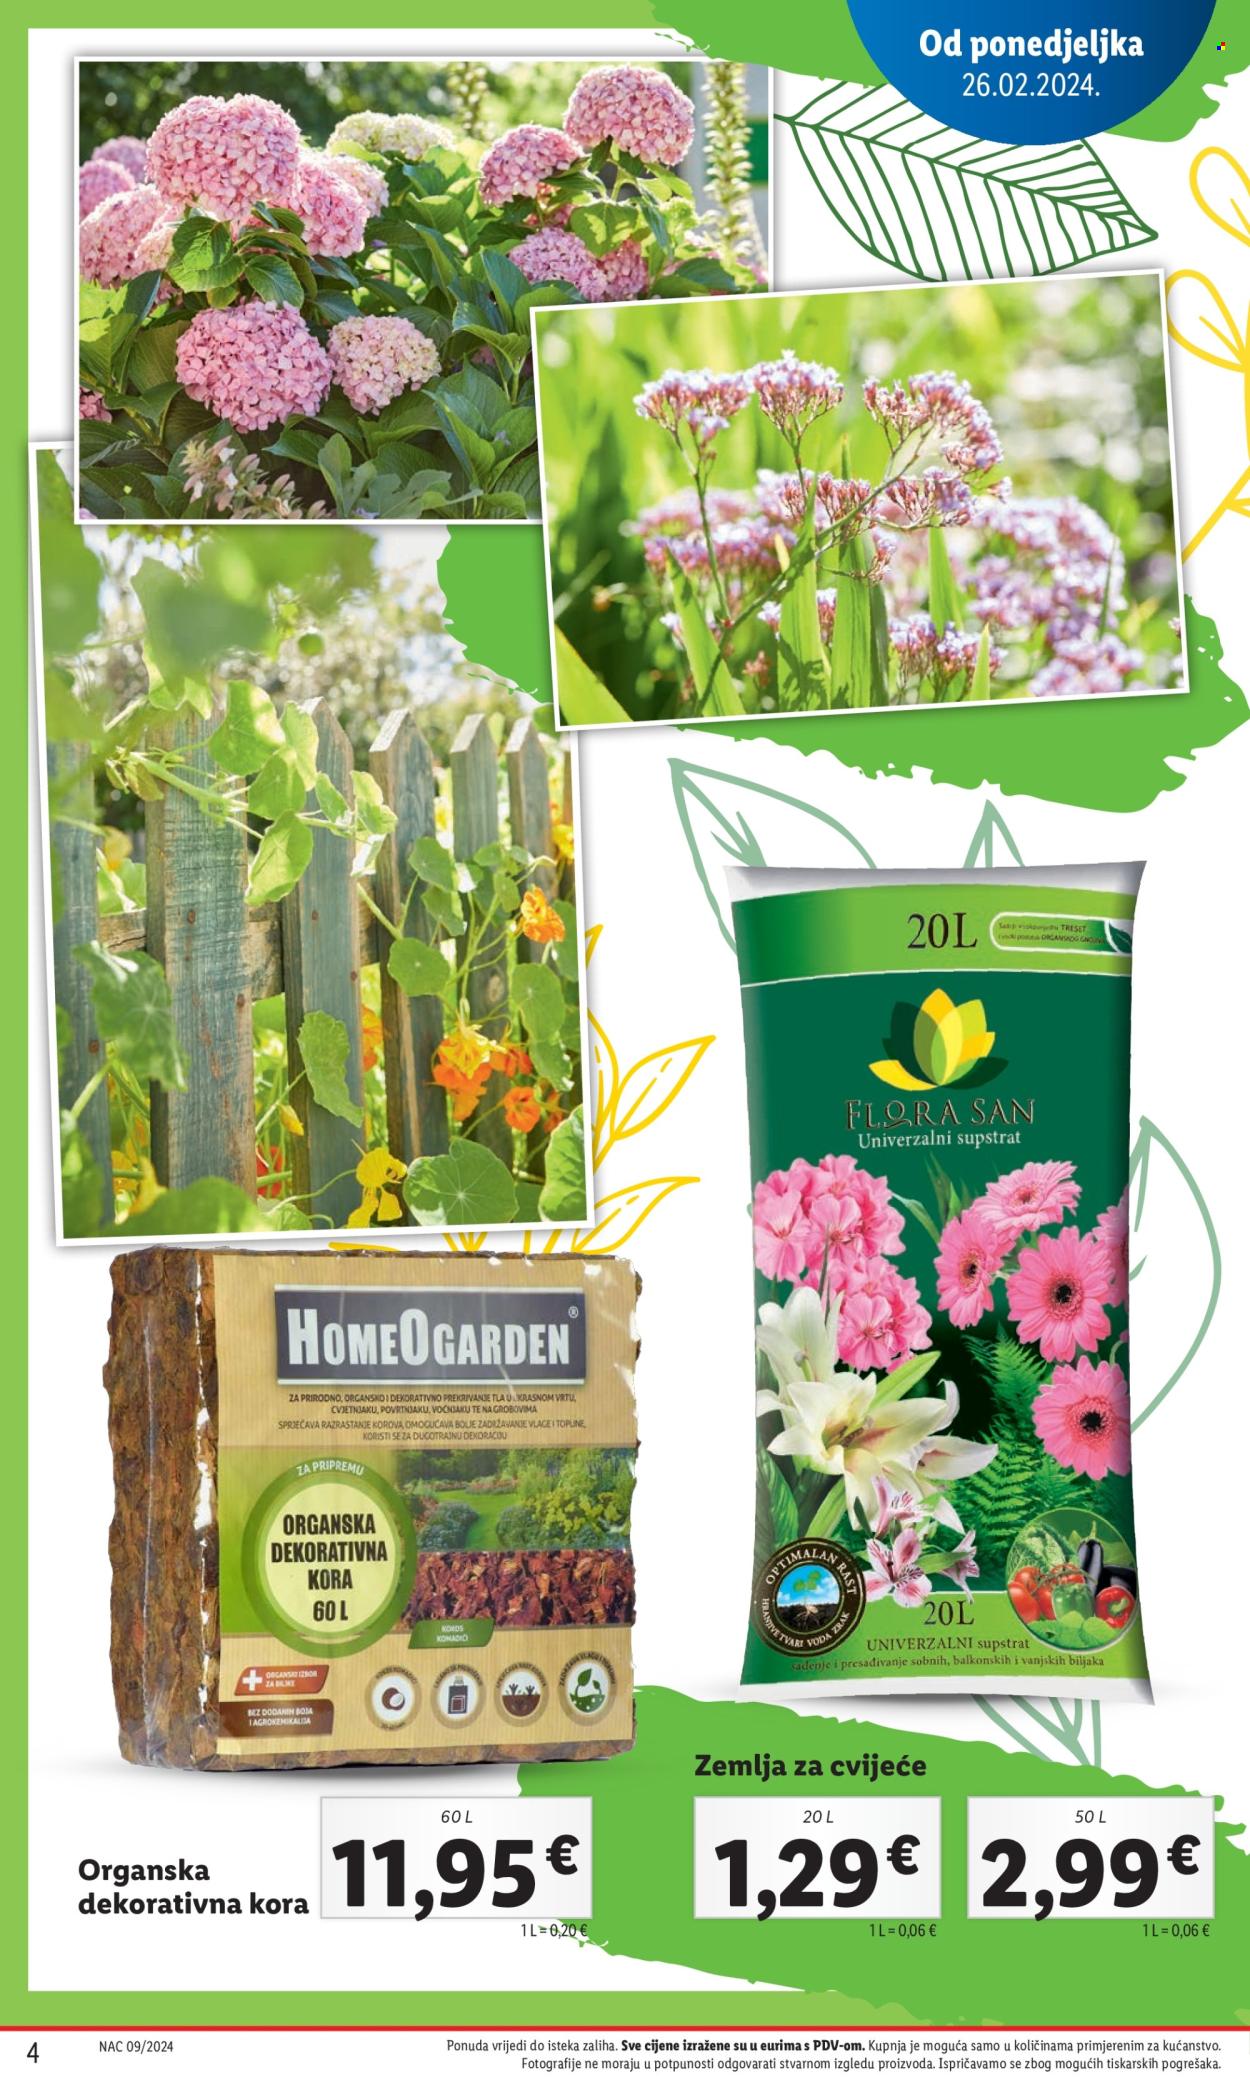 thumbnail - Lidl katalog - Sniženi proizvodi - zemlja za cvijeće, univerzalni supstrat, dekorativna kora, humusni treset. Stranica 4.